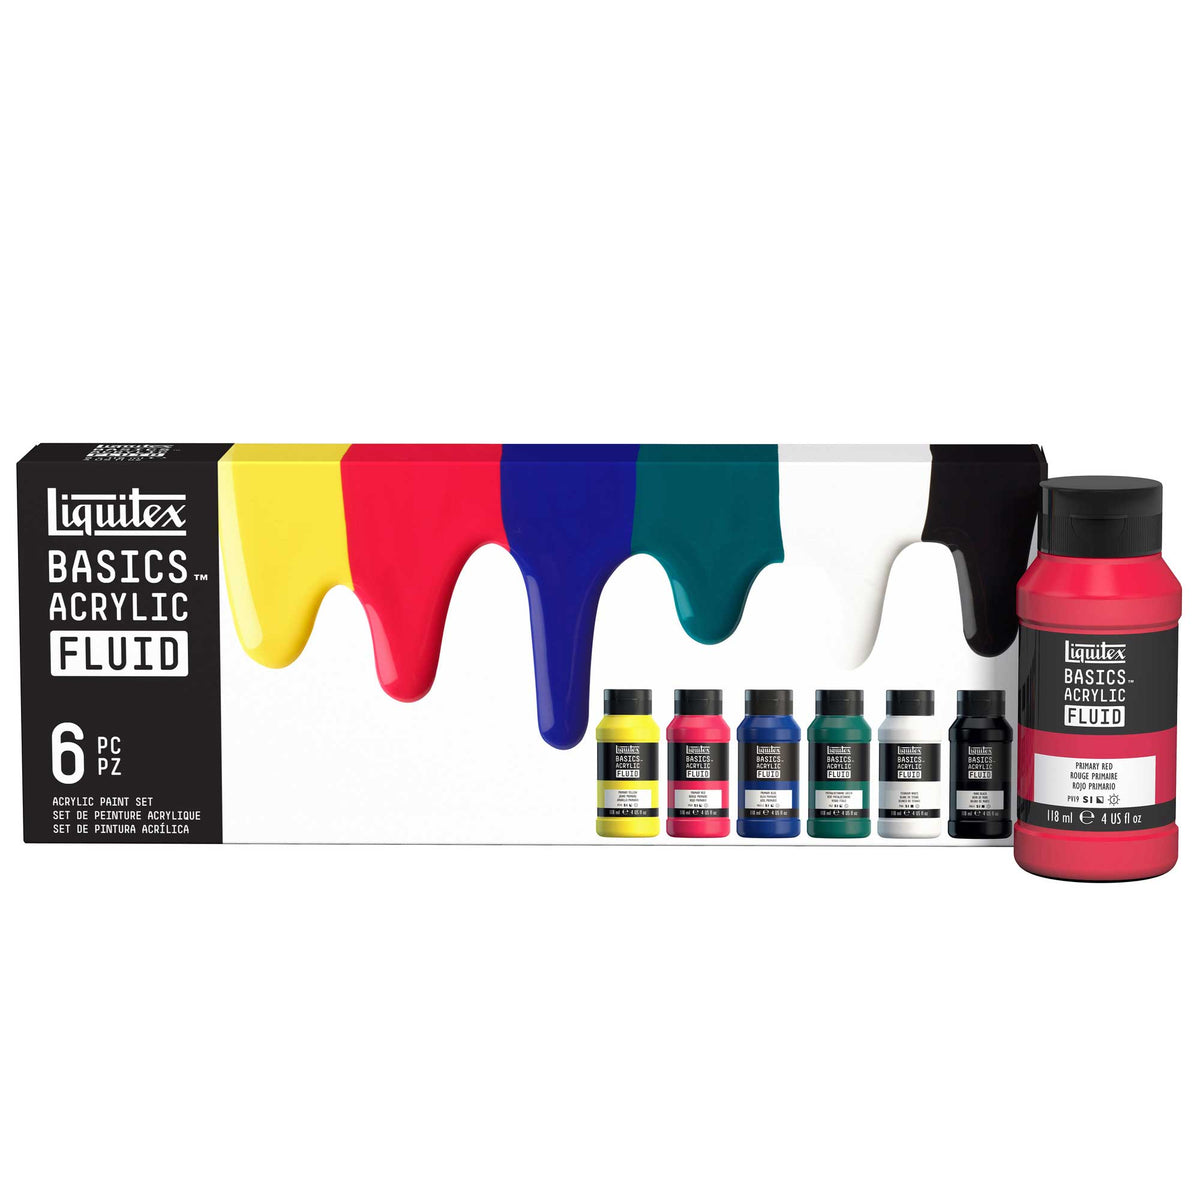 Liquitex Basics Acrylic Fluid - 118ml - Set of 6 Assorted Colours